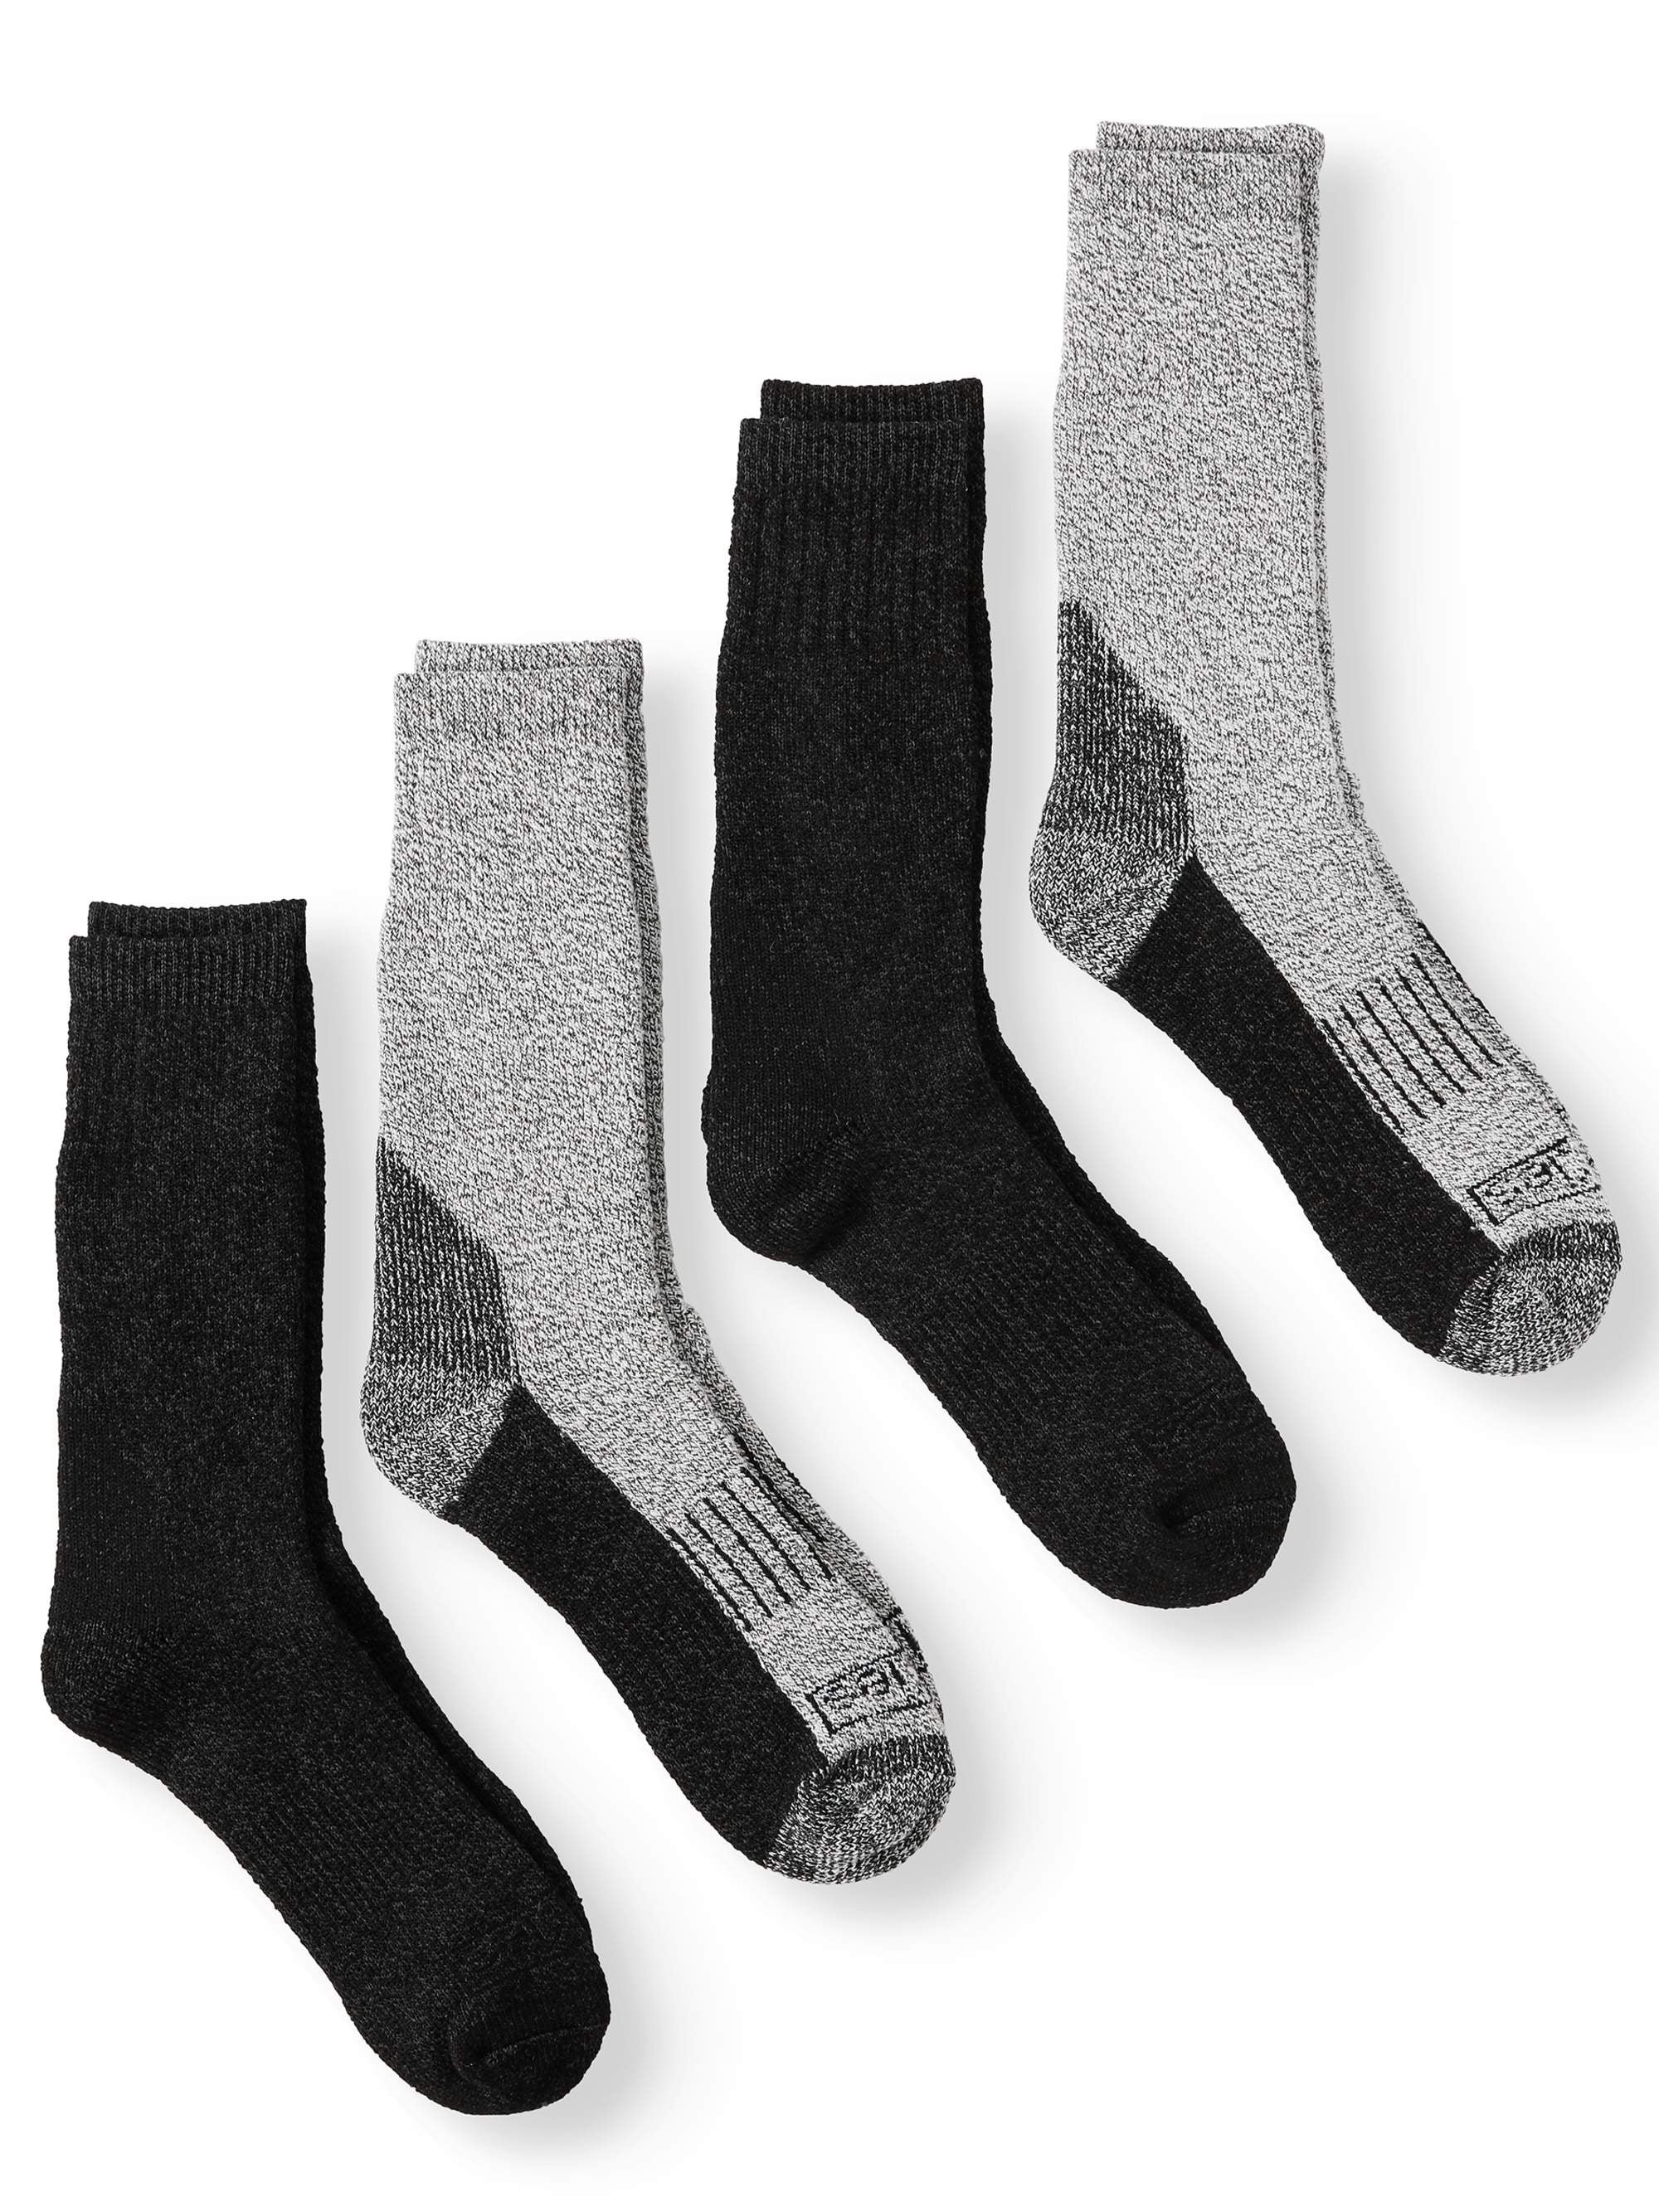 Men's Wool Marl Thermal Steel Toe Crew Socks, 4-Pack - Walmart.com